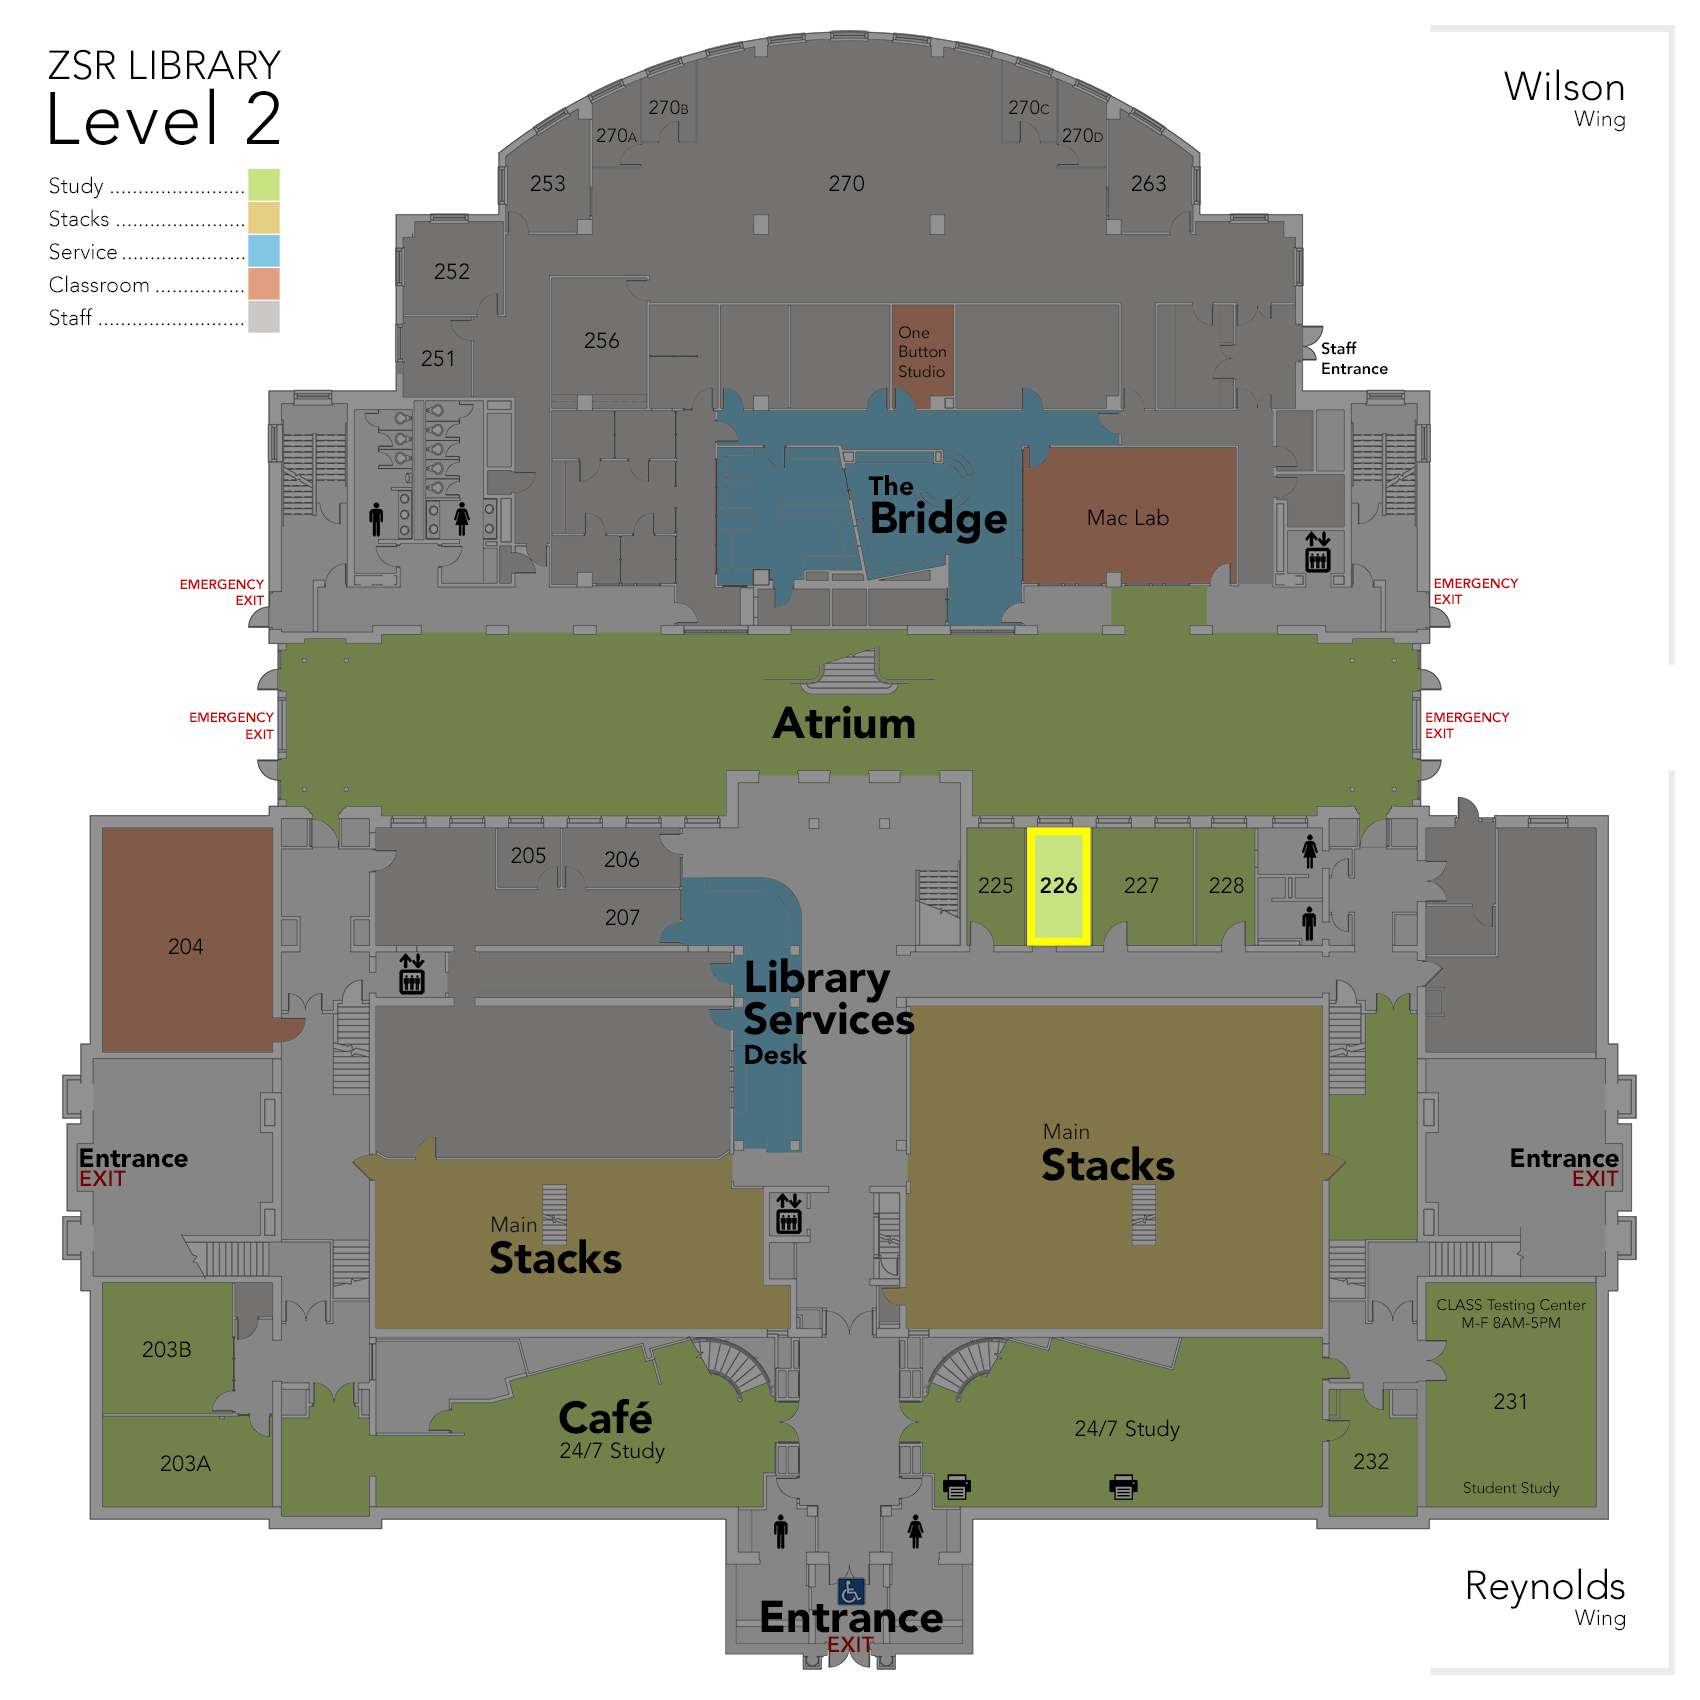 Level 2 Study Room 226 map